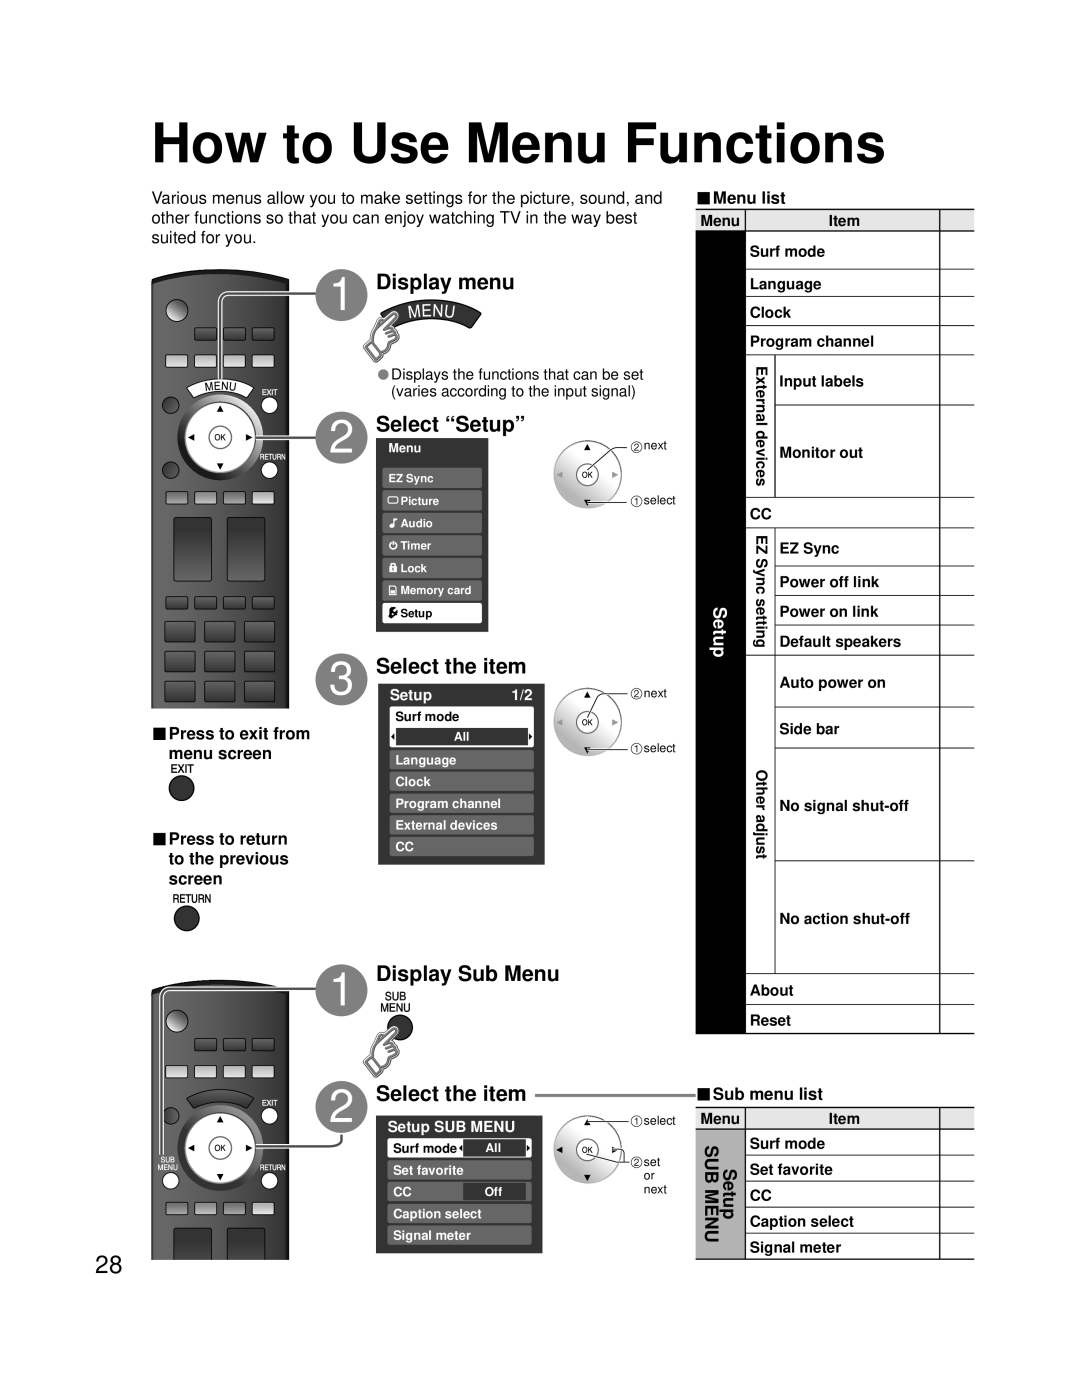 Panasonic TQB2AA0756 Select “Setup”, Display Sub Menu, Select the item, Sub menu list, Surf mode, Language, Clock, devices 